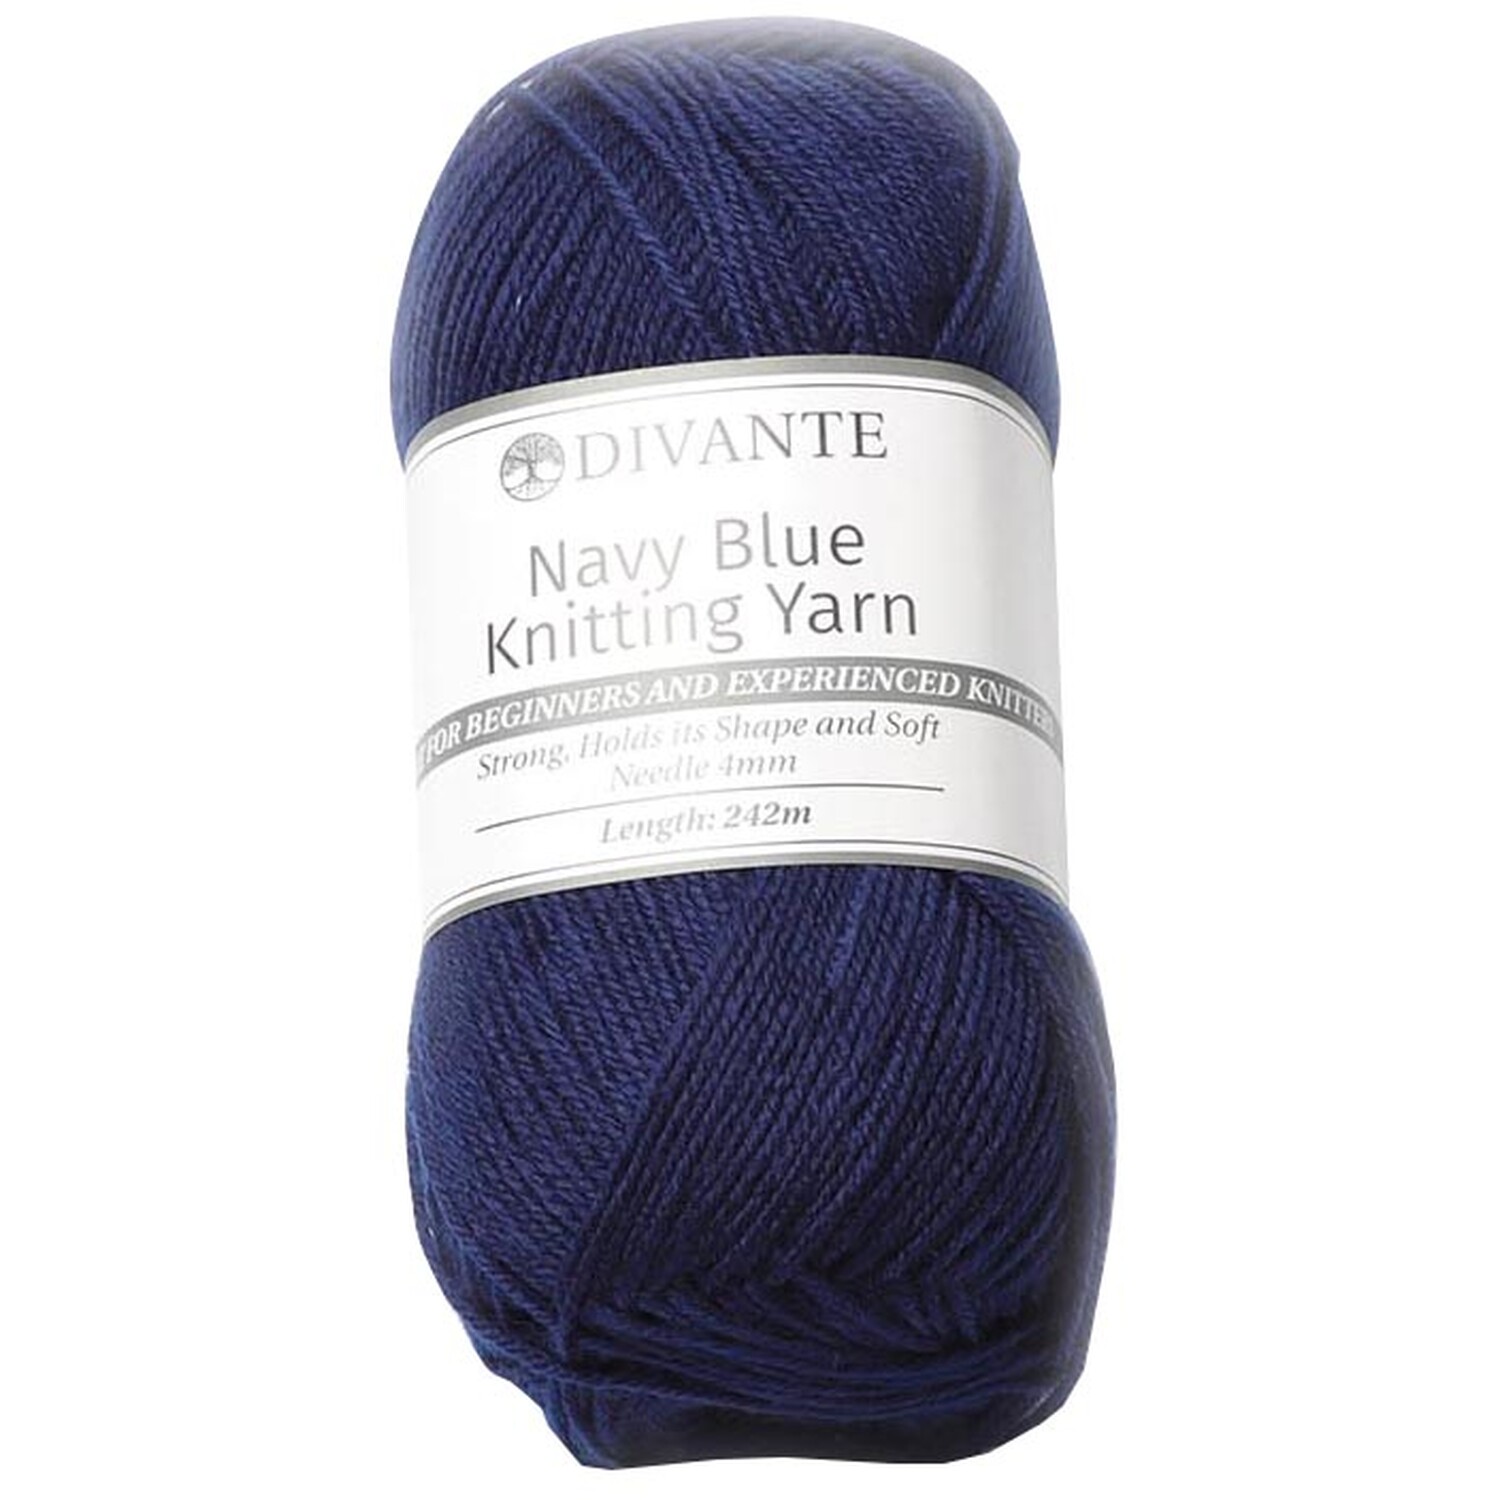 Divante Basic Knitting Yarn - Navy Blue Image